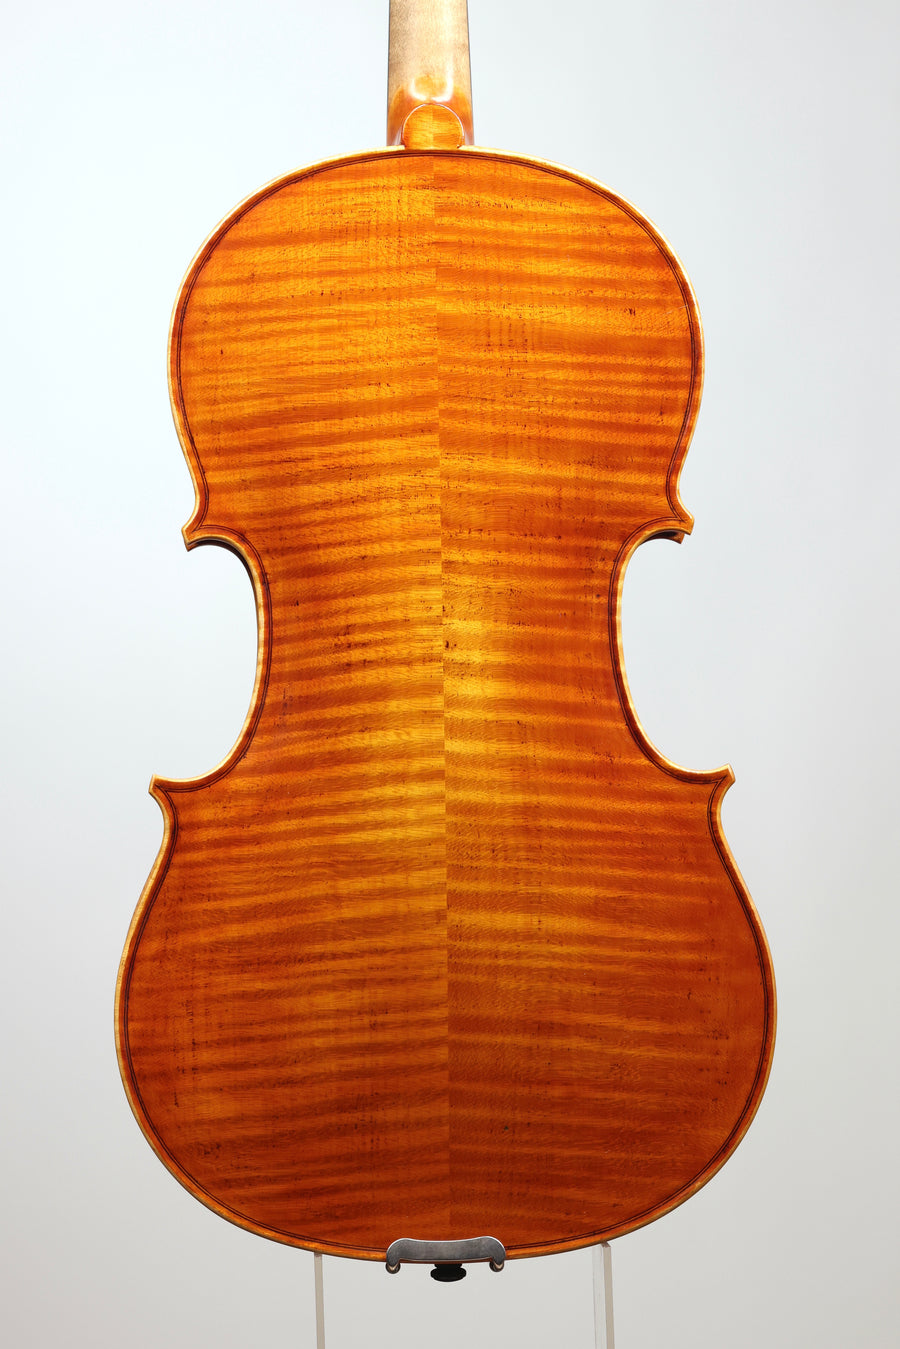 A Beautiful Contemporary Cremonese Viola By Yam Uri Raz, 2015. 16 1/4”